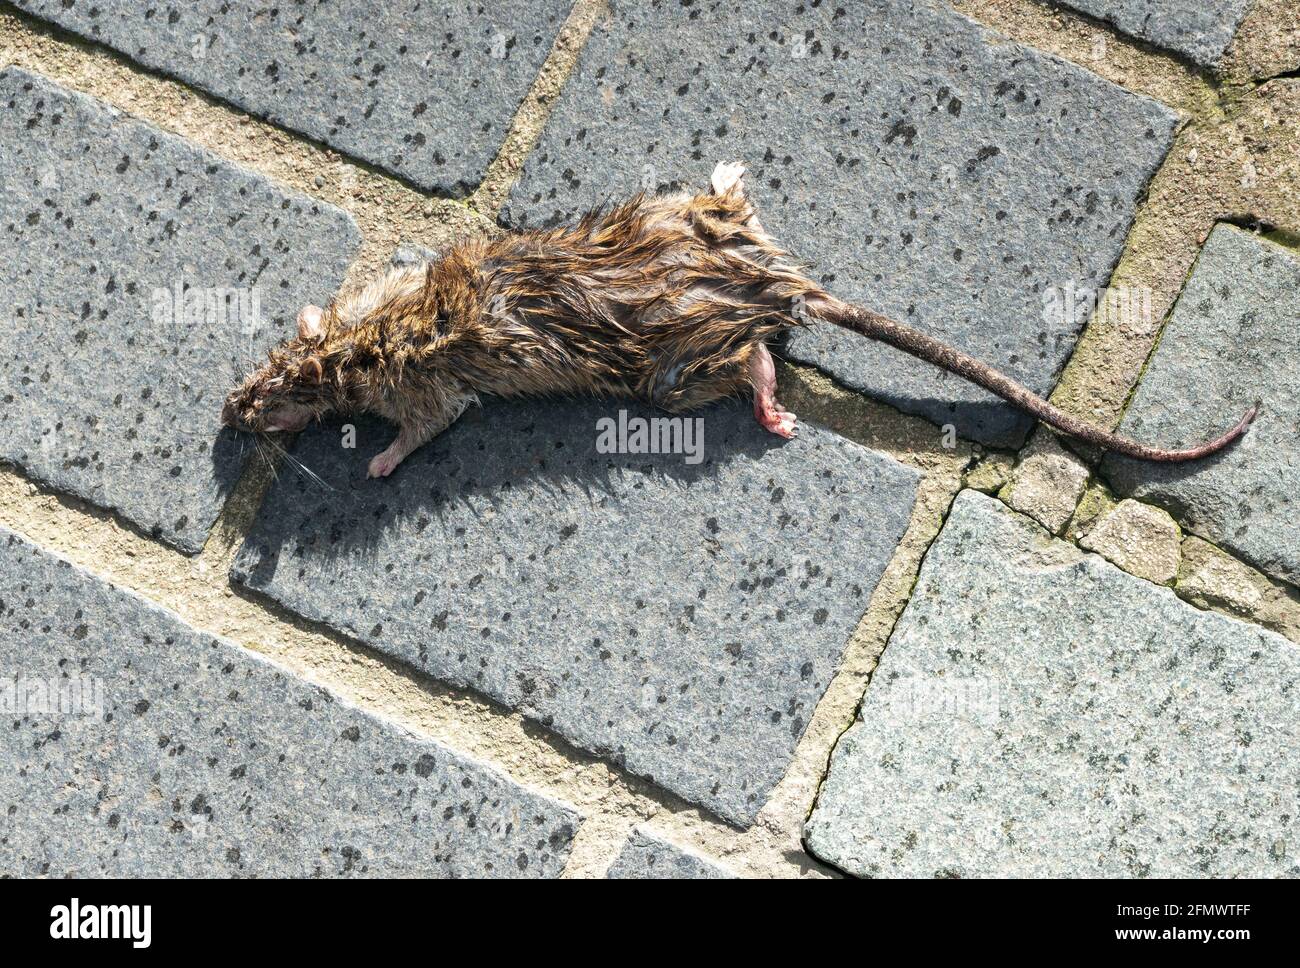 A dead rat on a street (Rattus norvegicus) Stock Photo